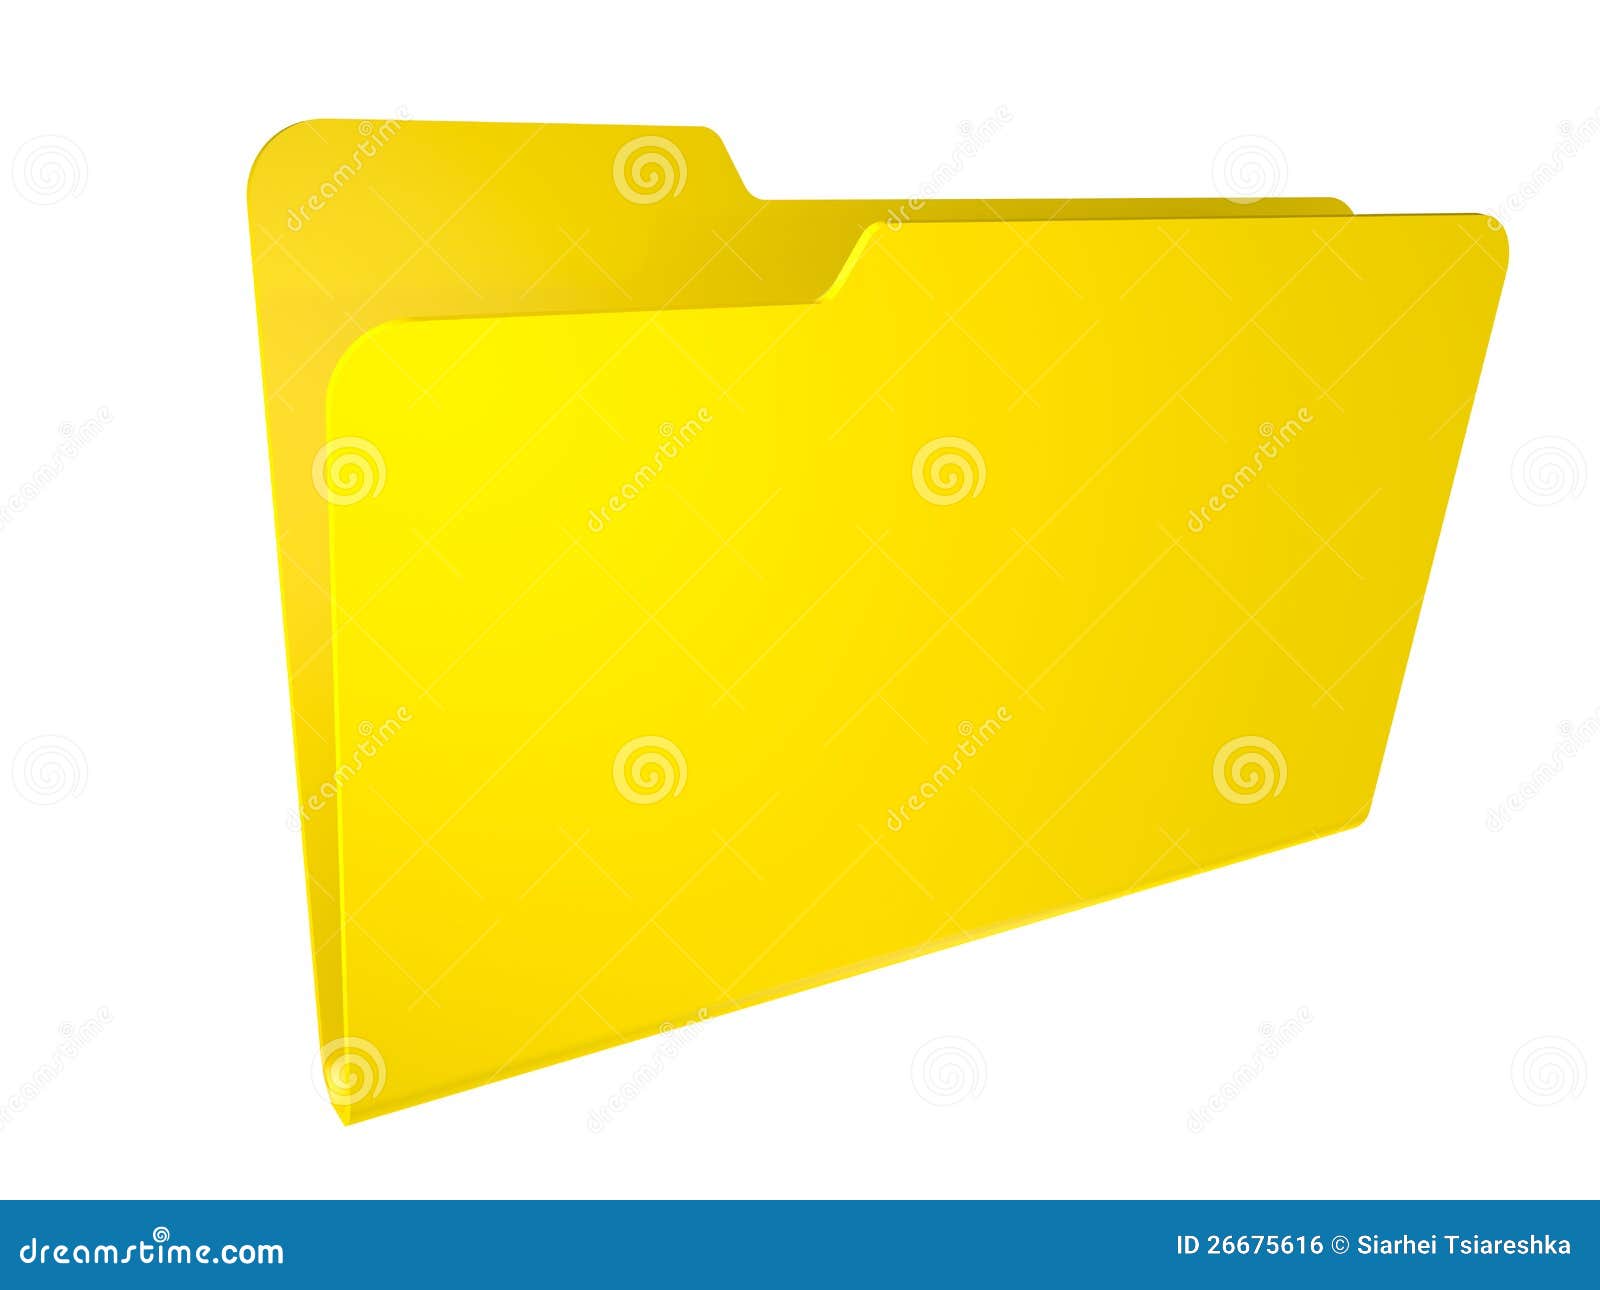 Empty Yellow Folder. Isolated On White. Royalty Free Stock ...
